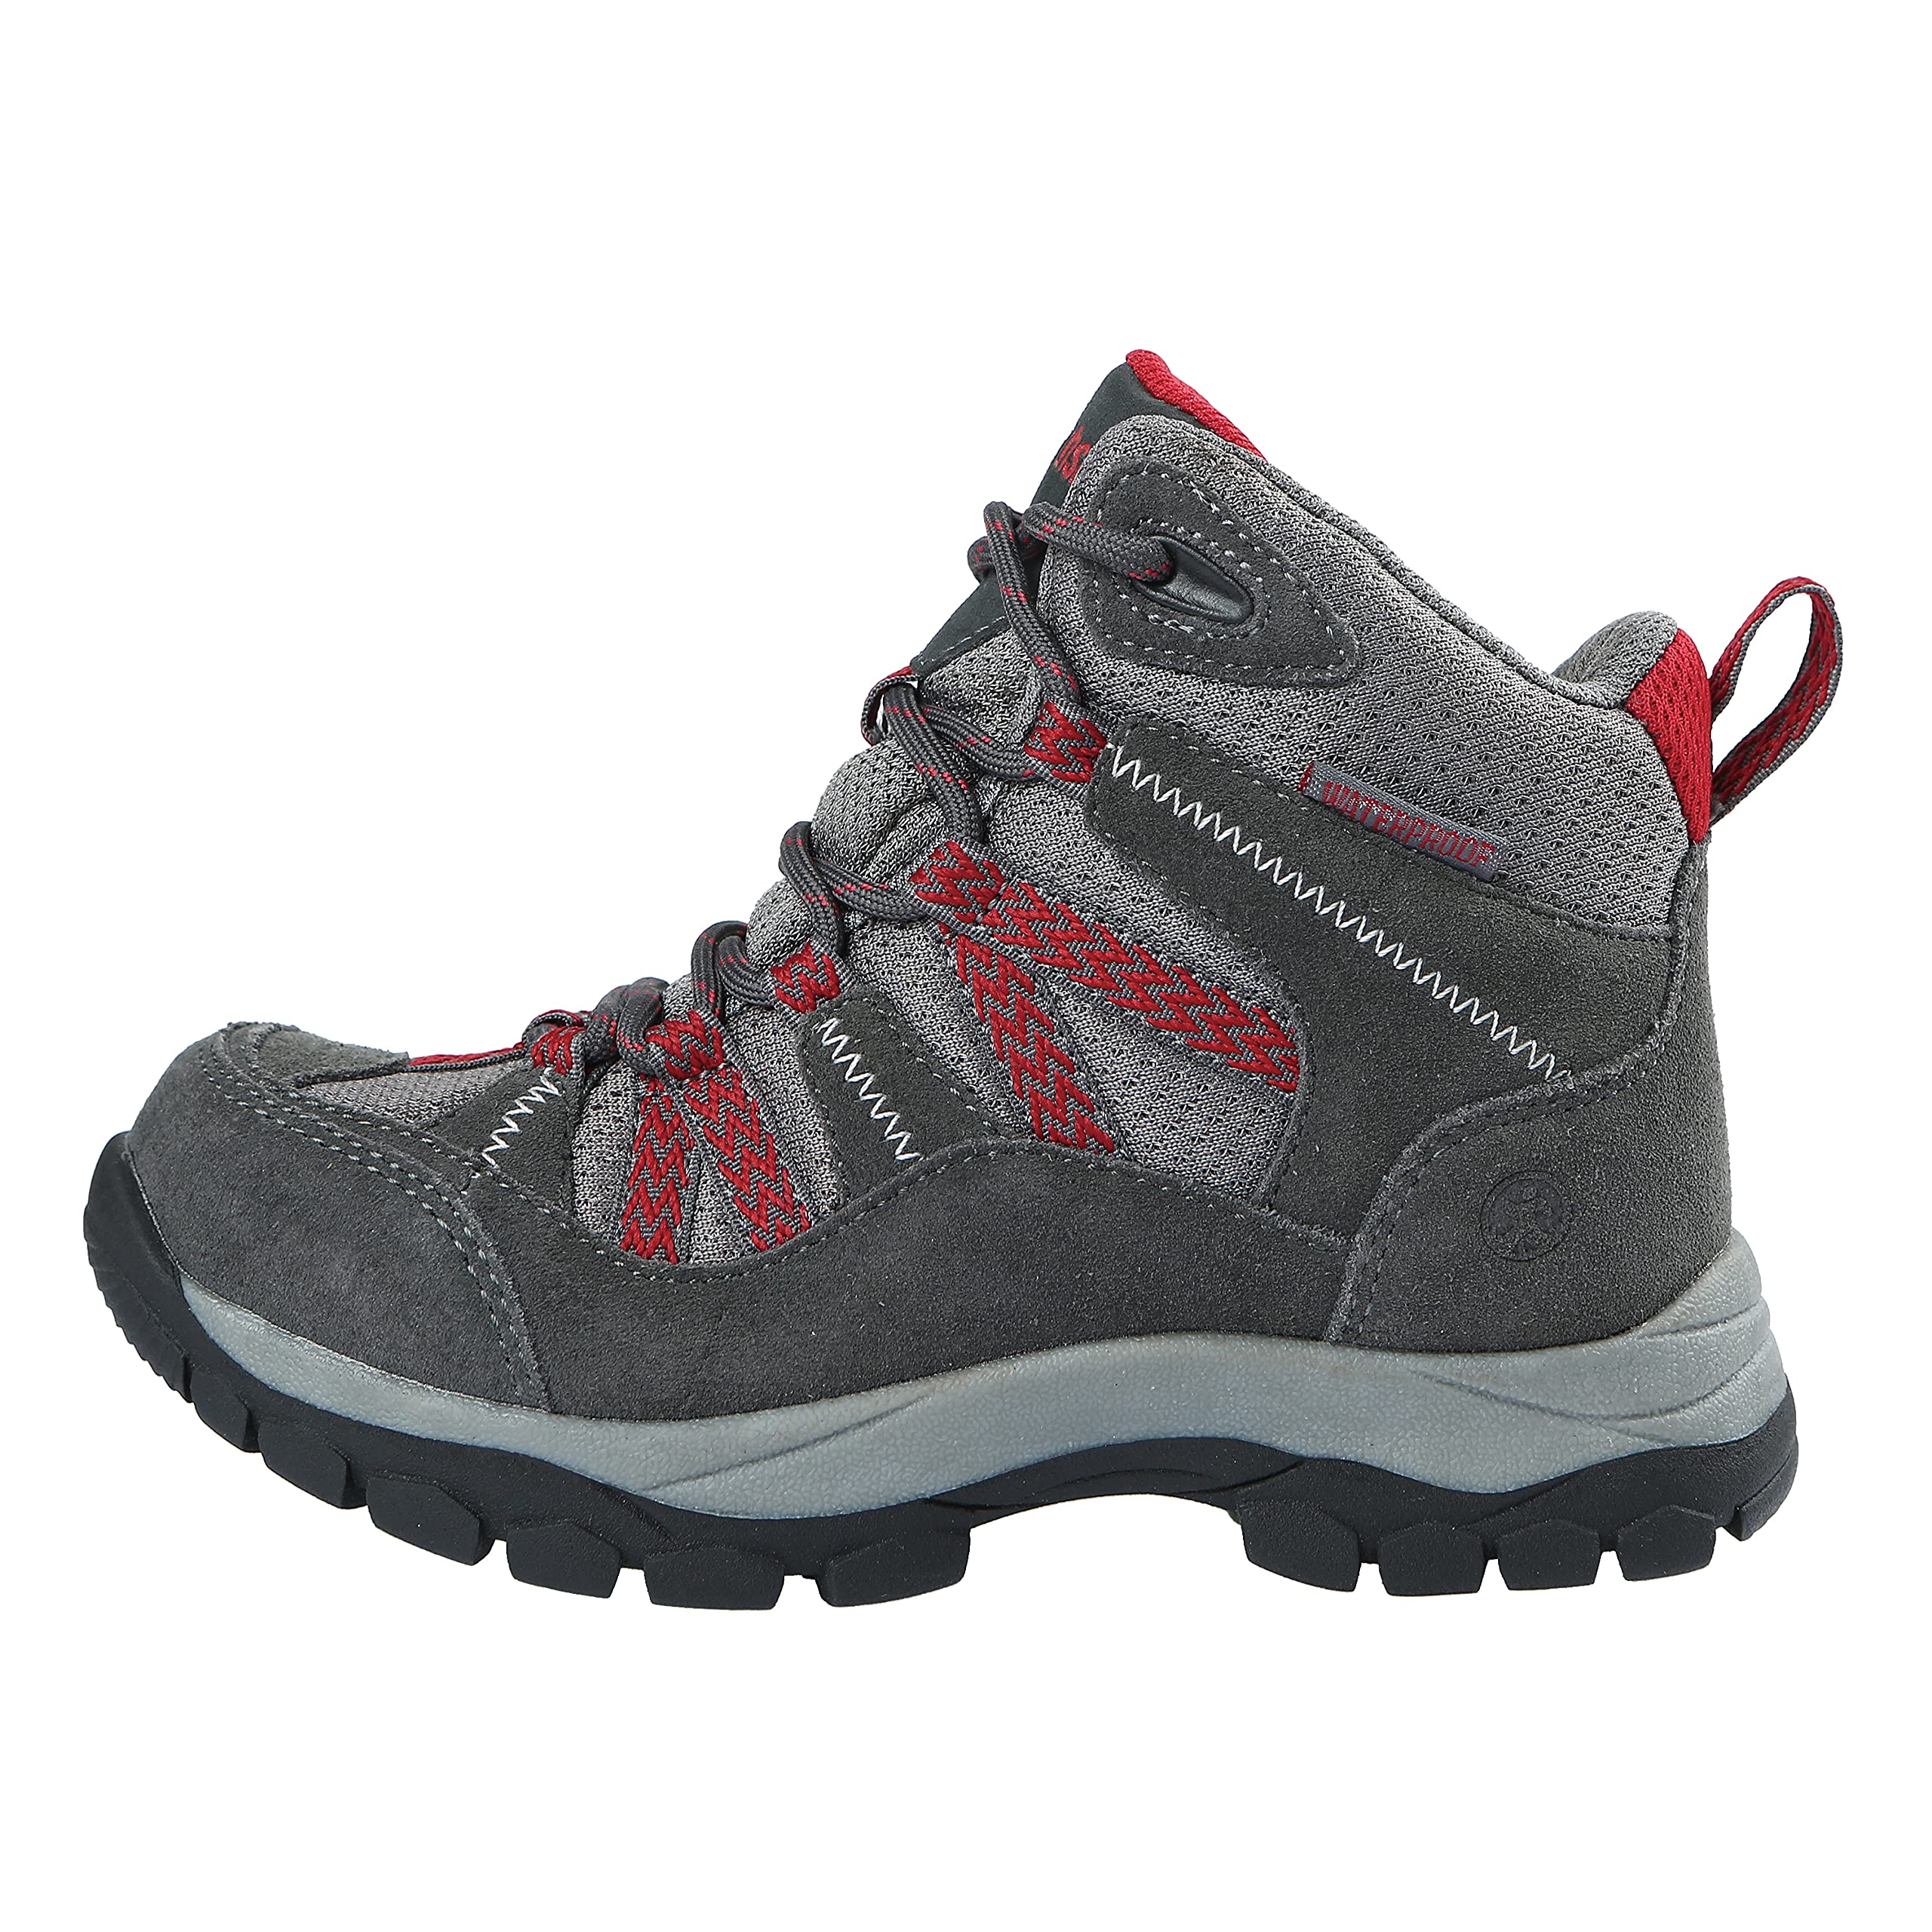 Northside Unisex Freemont Waterproof Hiking Boot, Dark Gray/red, 3 Medium US Little Kid